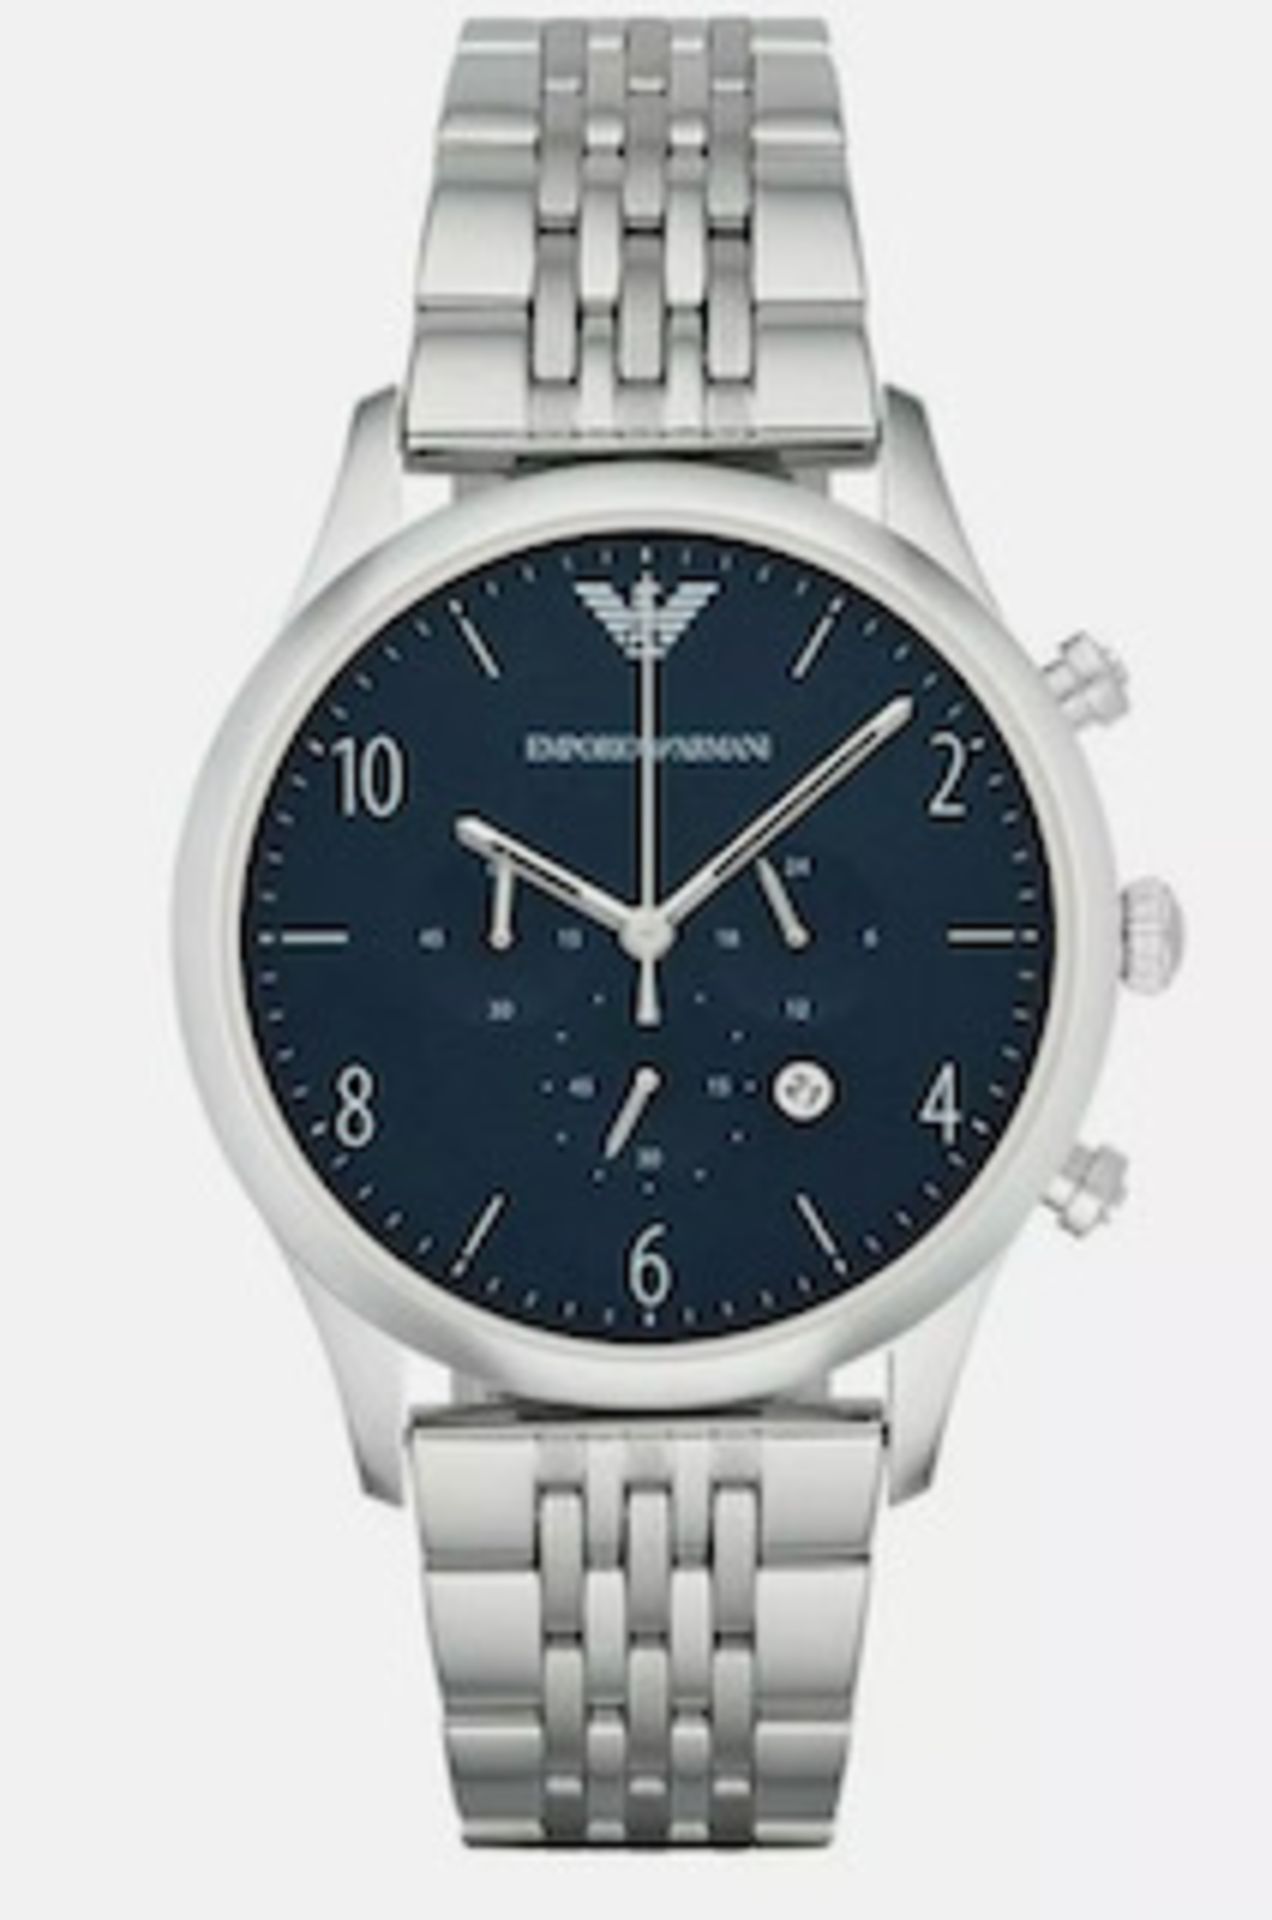 Emporio Armani AR1942 Men's Silver Bracelet Chronograph Watch